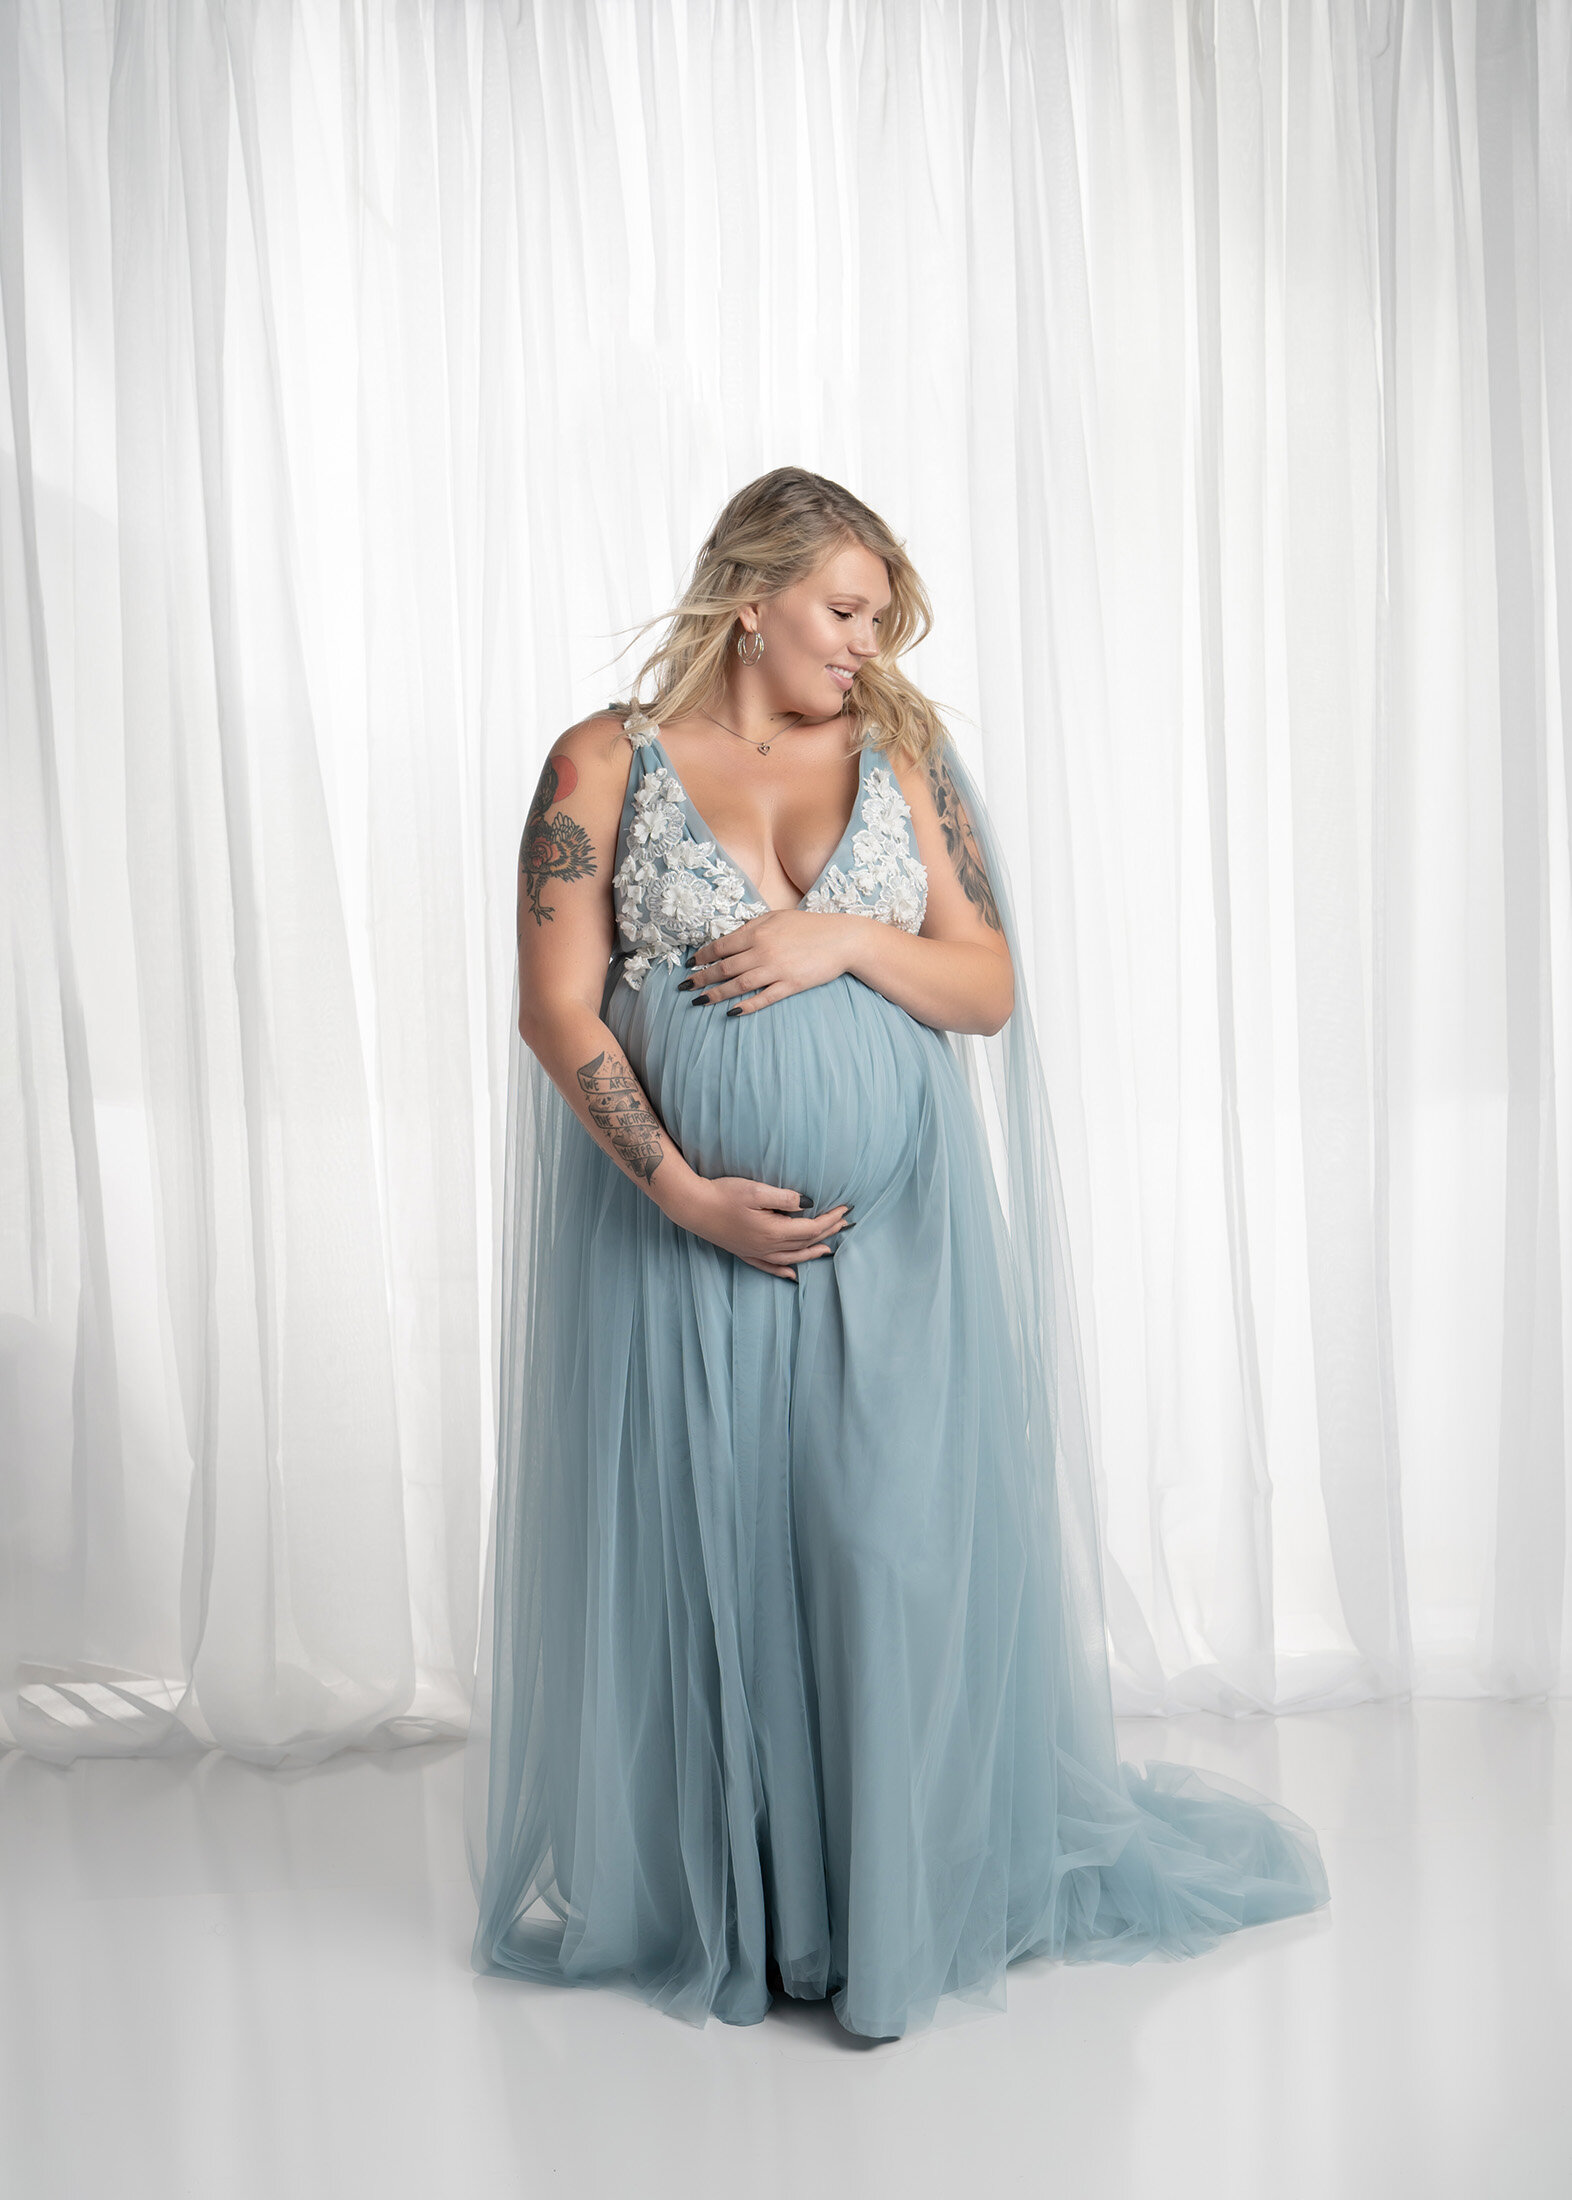 Boca Raton Maternity Photographer, south florida maternity photographer